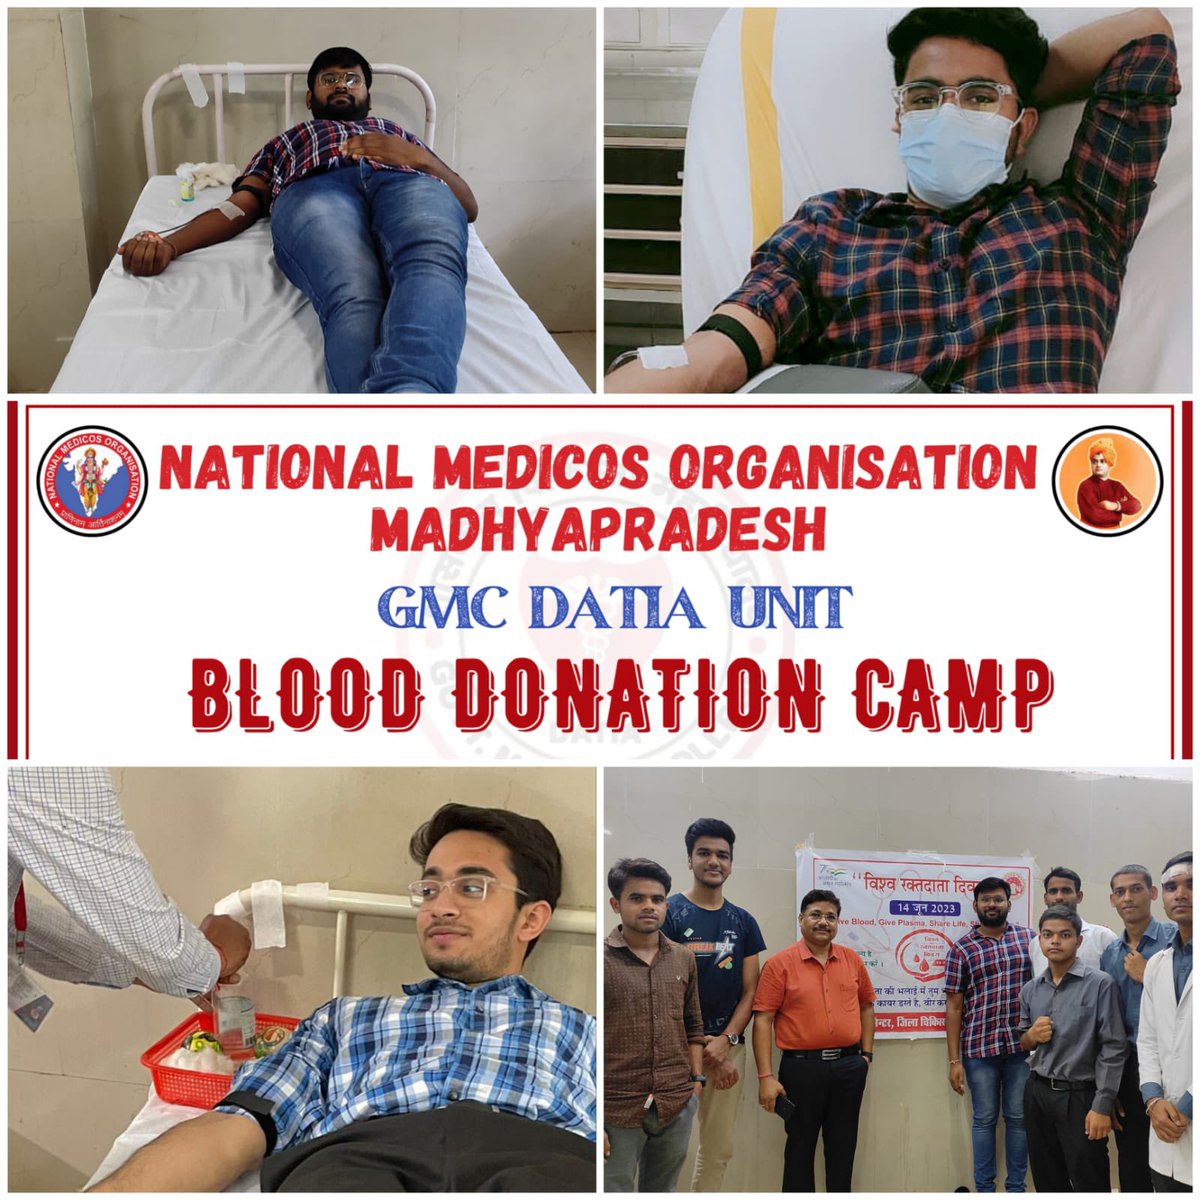 Blood donation camp at GMC Datia total 80 donation on Occasion of World Blood Donor’s day #NMO #BloodDonors #healthcare @dr_vishwambhar @vishwa_samvad @JansamparkMP @VishvasSarang @healthminmp @NMOBharat @dryogendermalik @DainikBhaskar